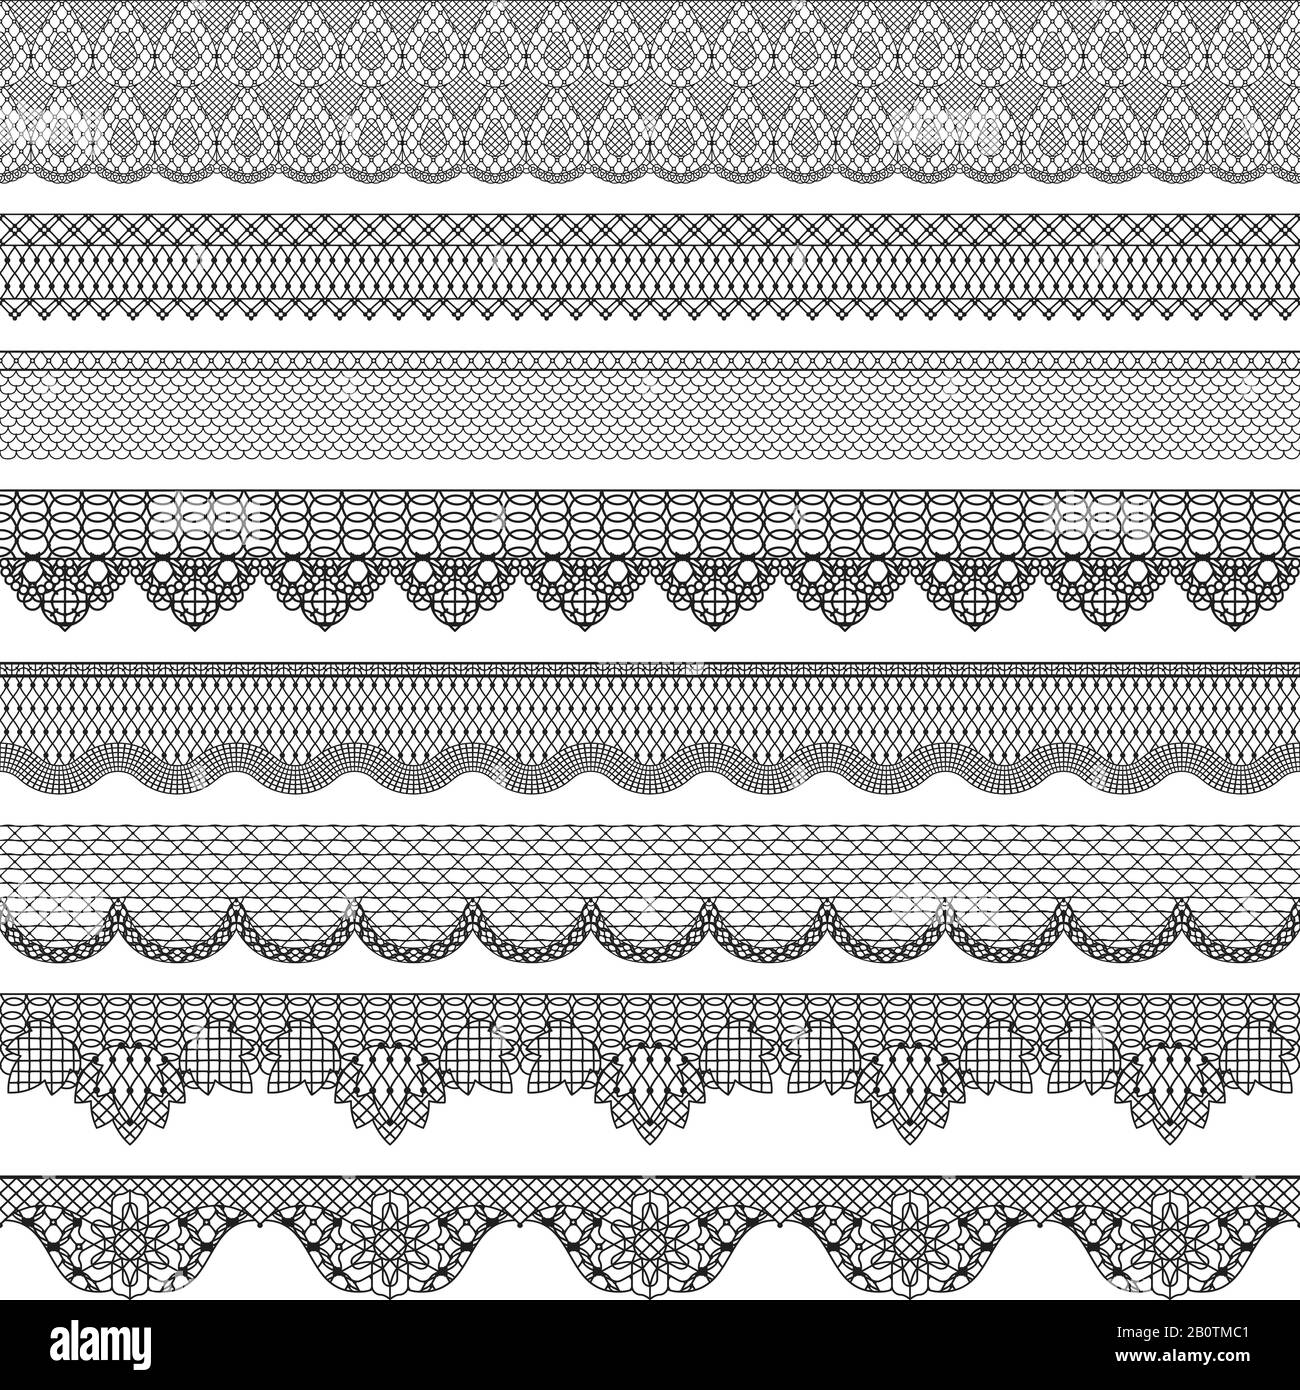 Seamless Lace Pattern and Borders  Wedding borders, Lace pattern